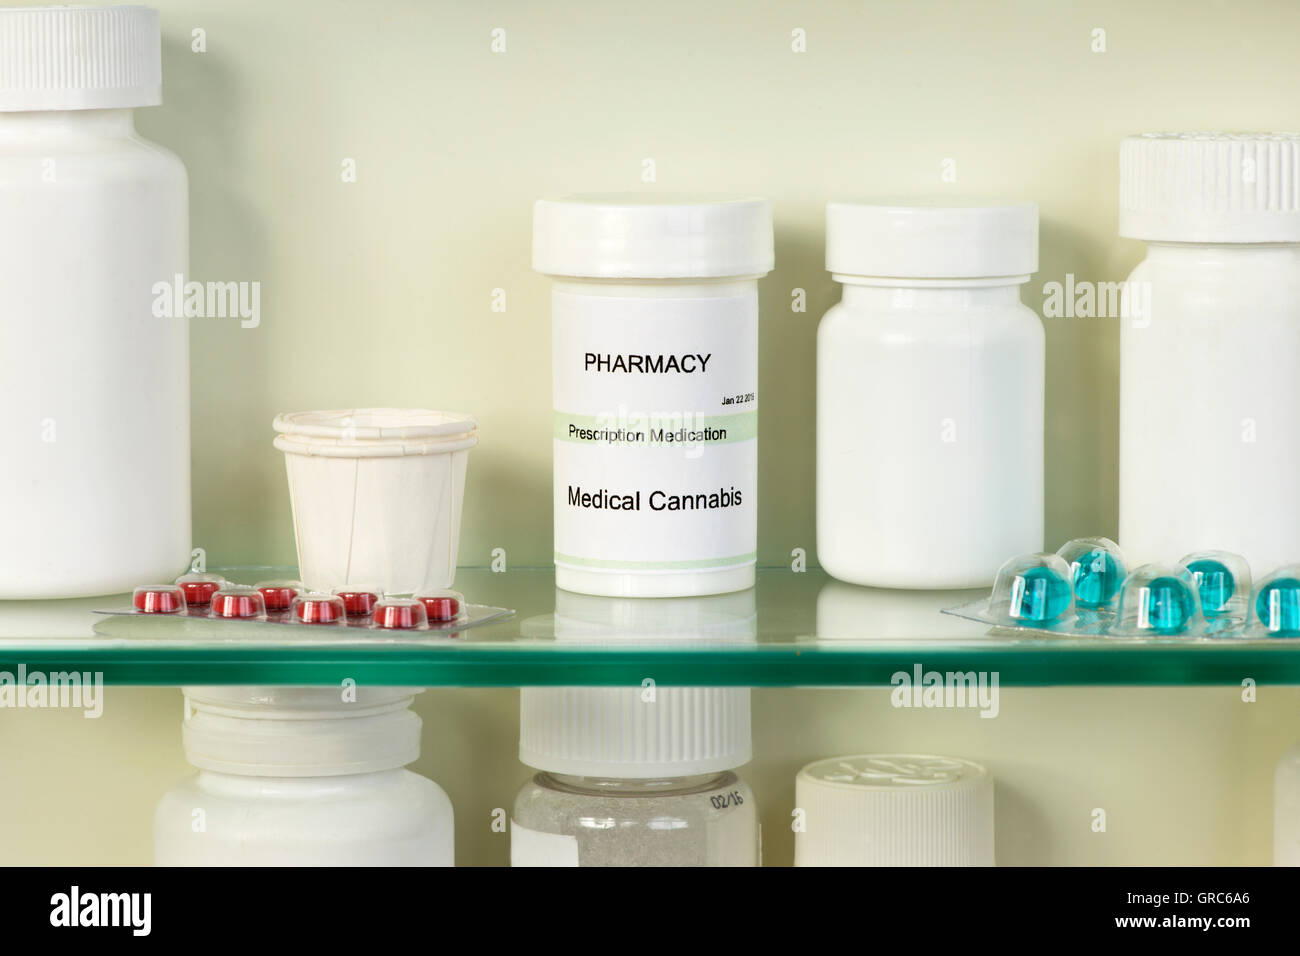 Medical Marijuana Container On Medicine Cabinet Shelf Labels Are